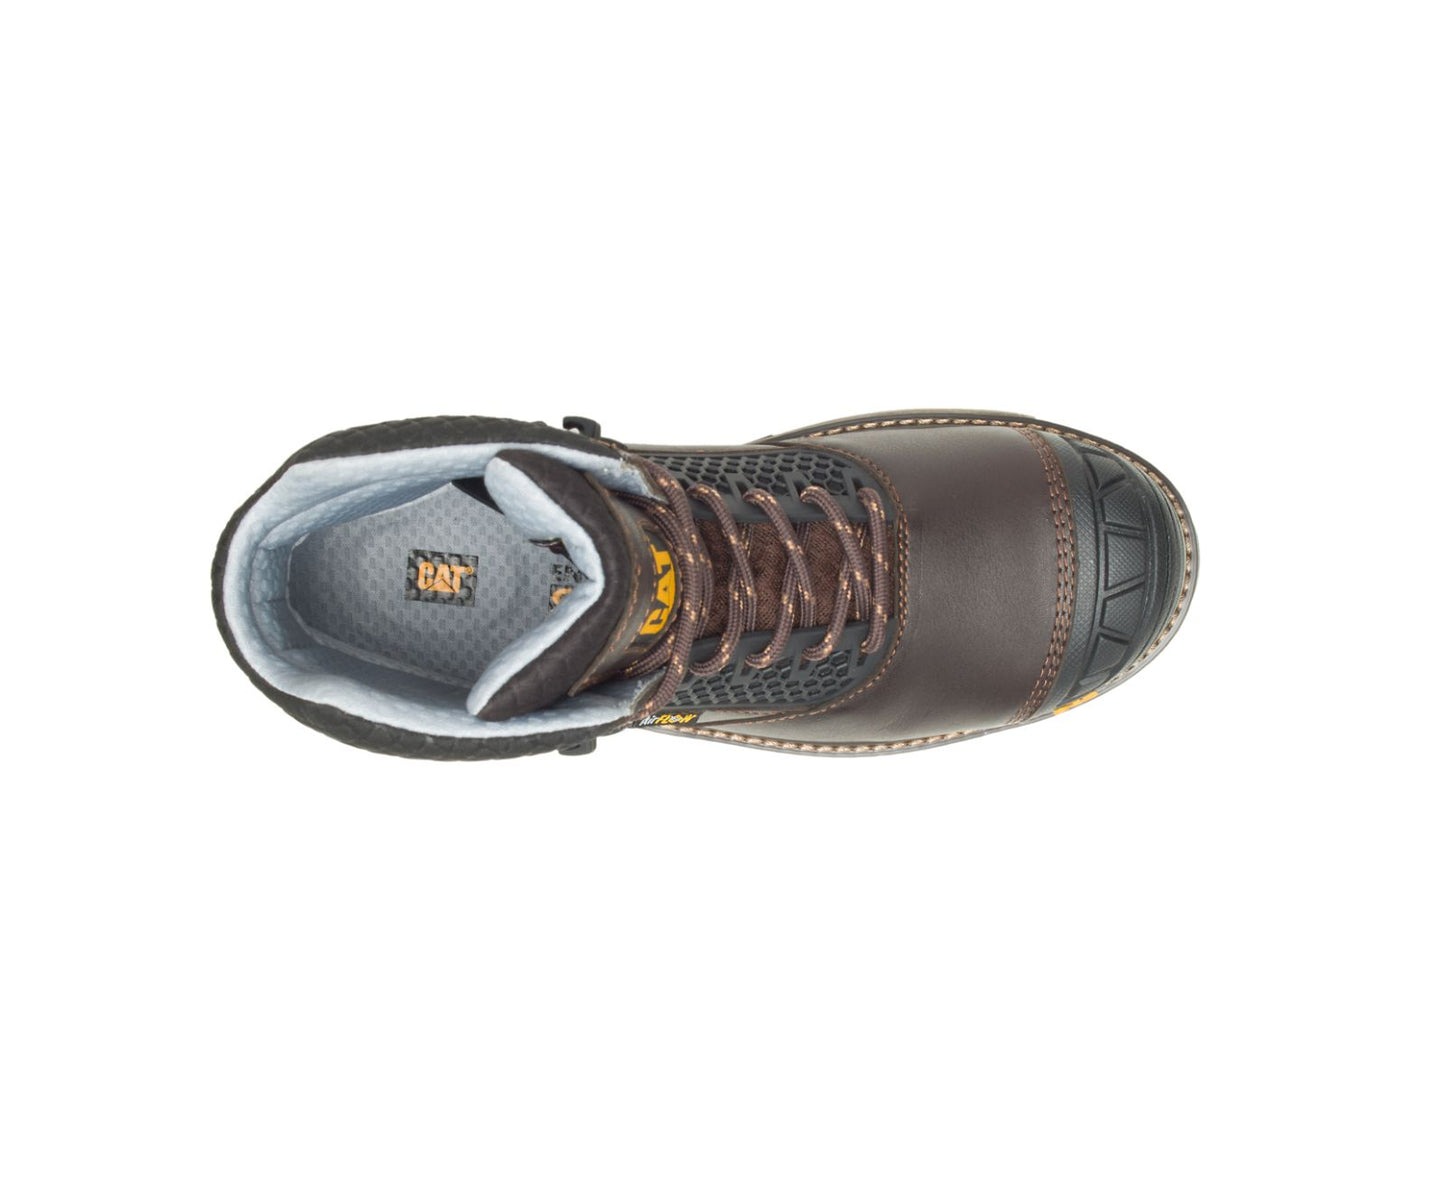 P91340 Caterpillar 6 Inch , Composite Toe Work Boot (Brown)